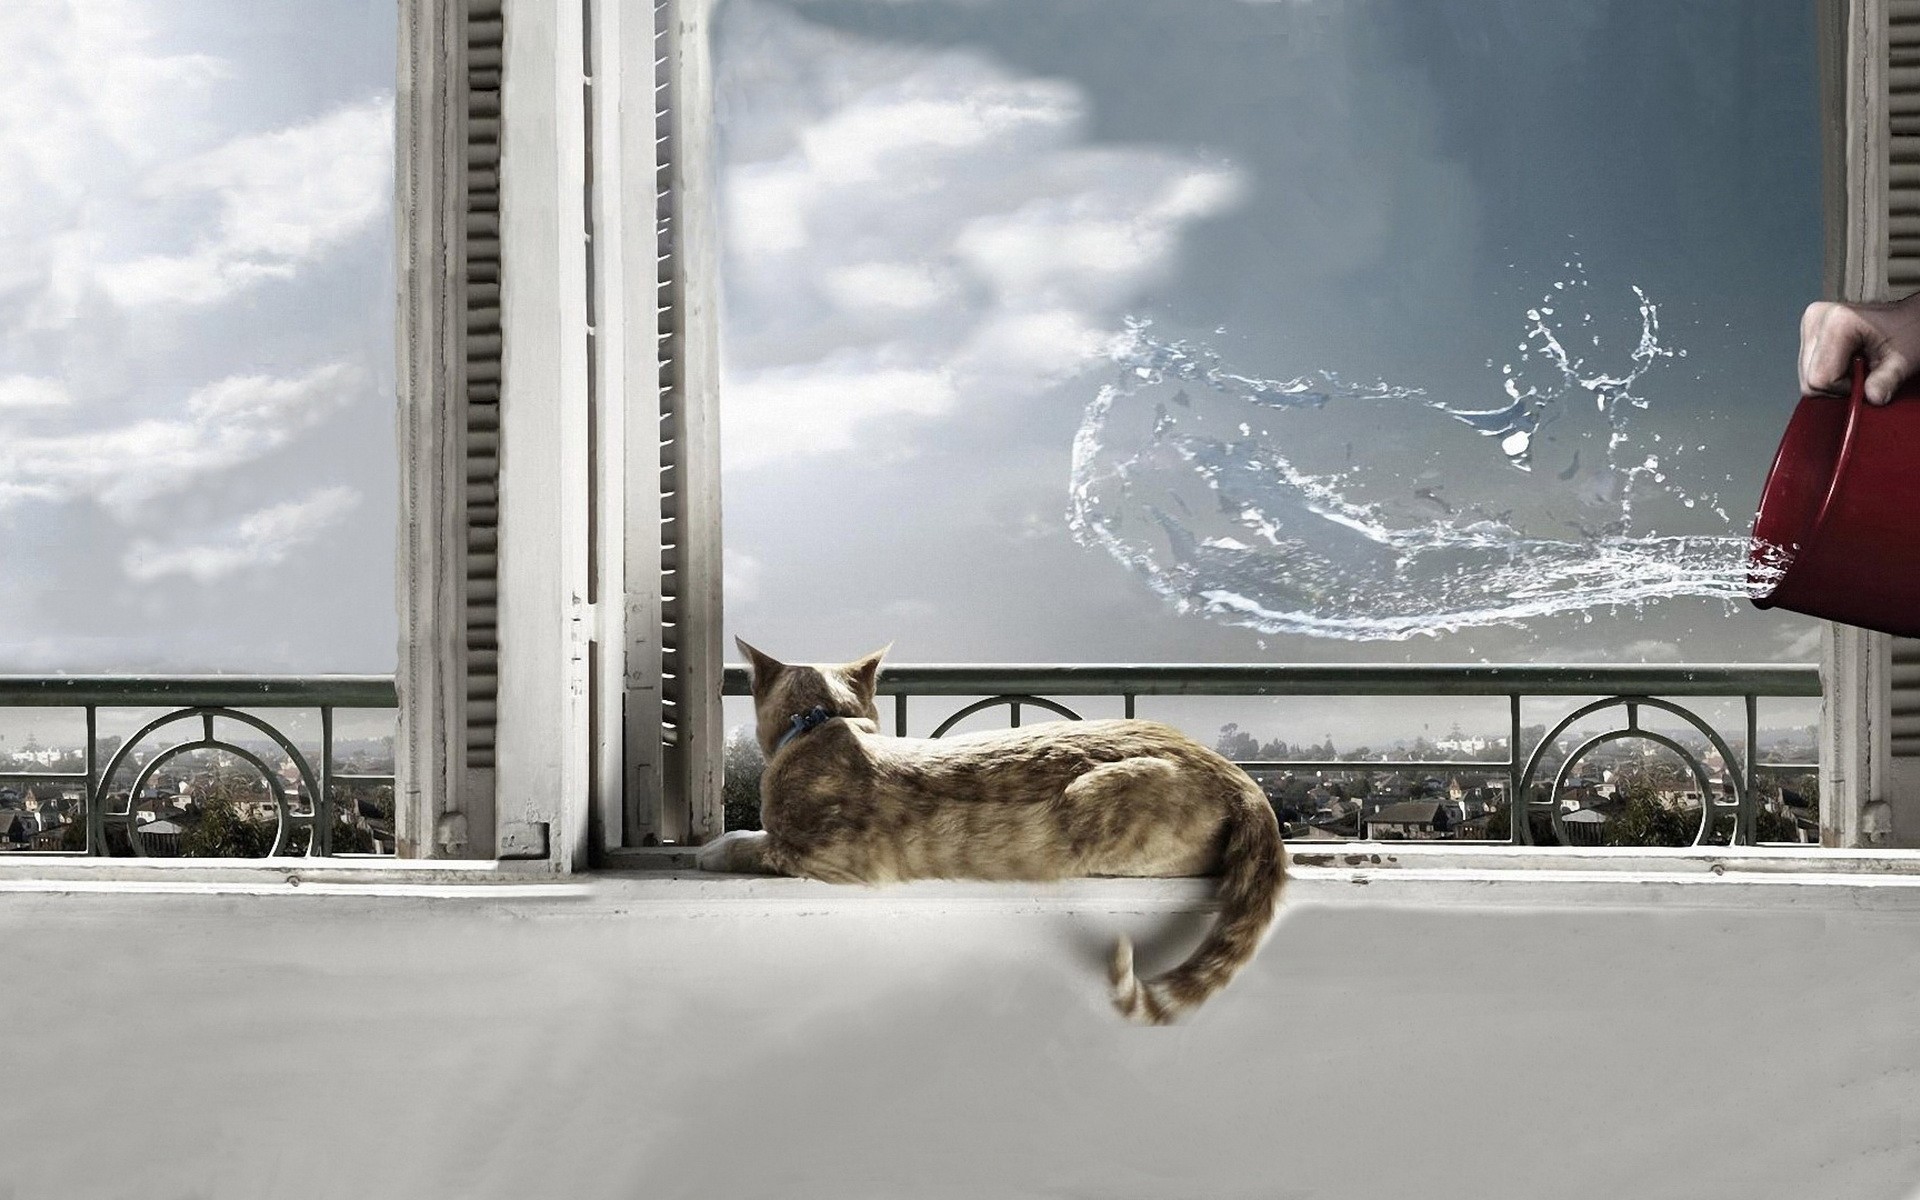 Animal Cat HD Wallpaper